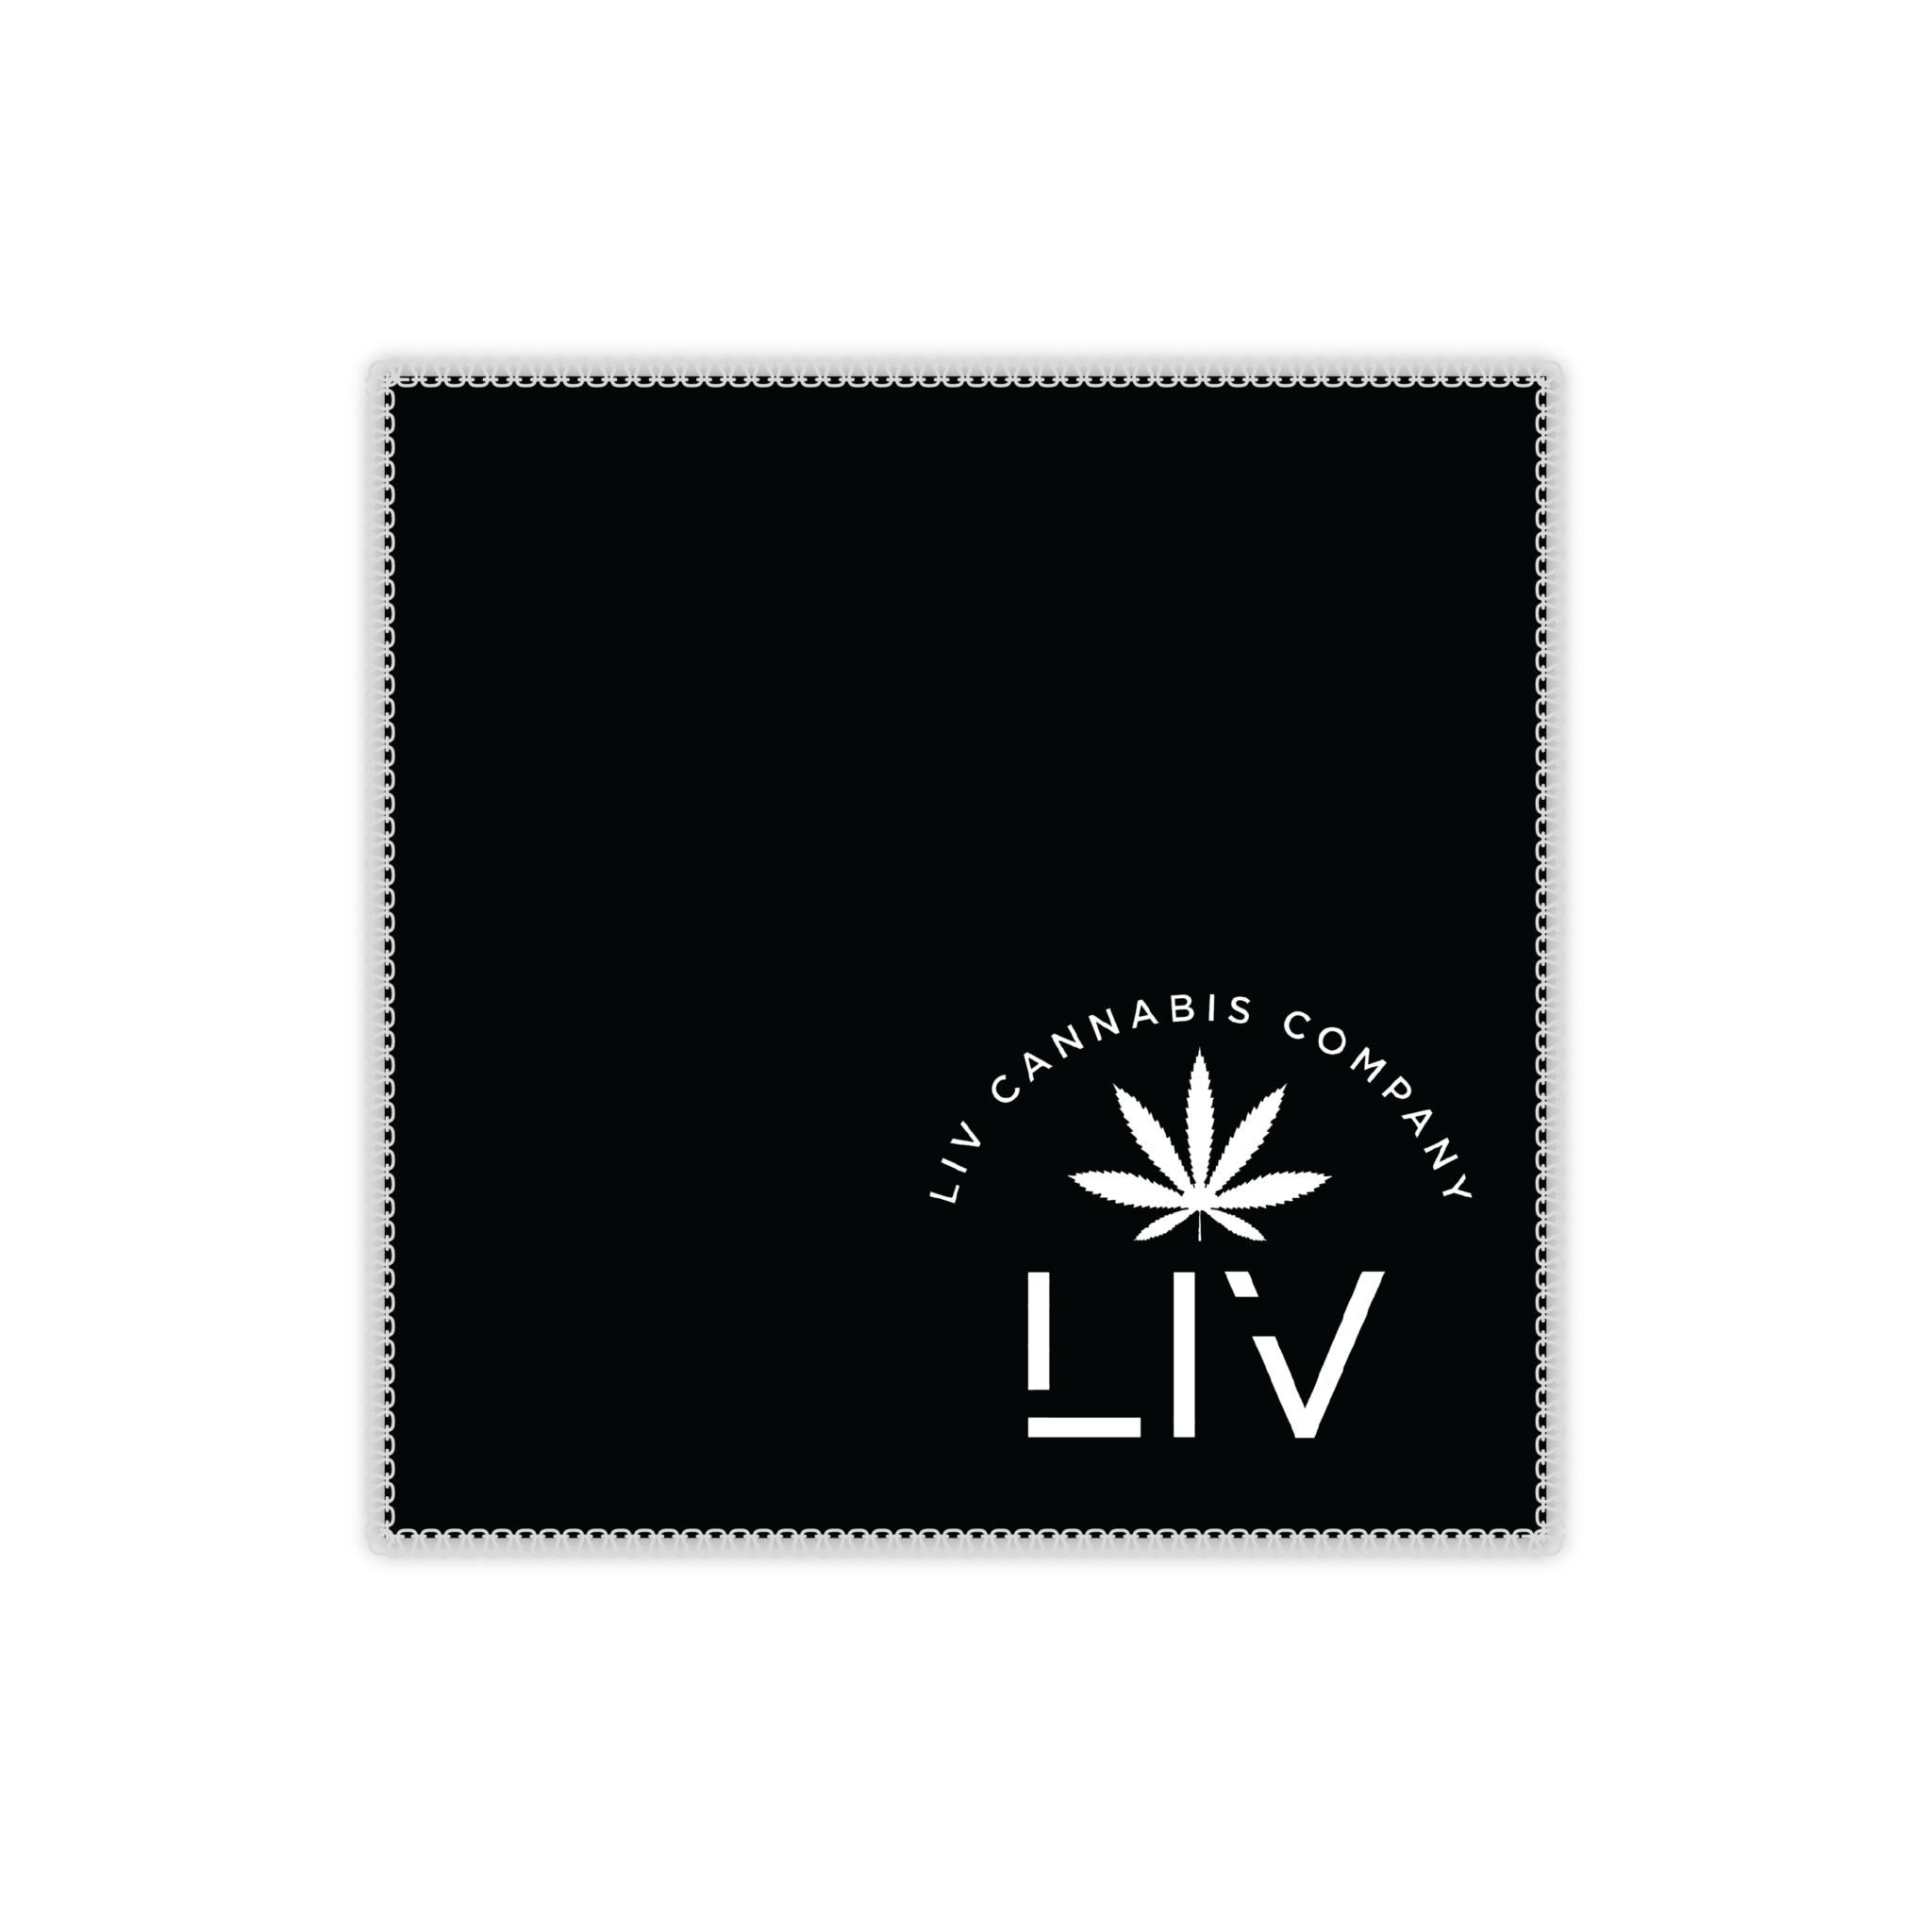 LIV Cannabis Company Stitched Cloth Design